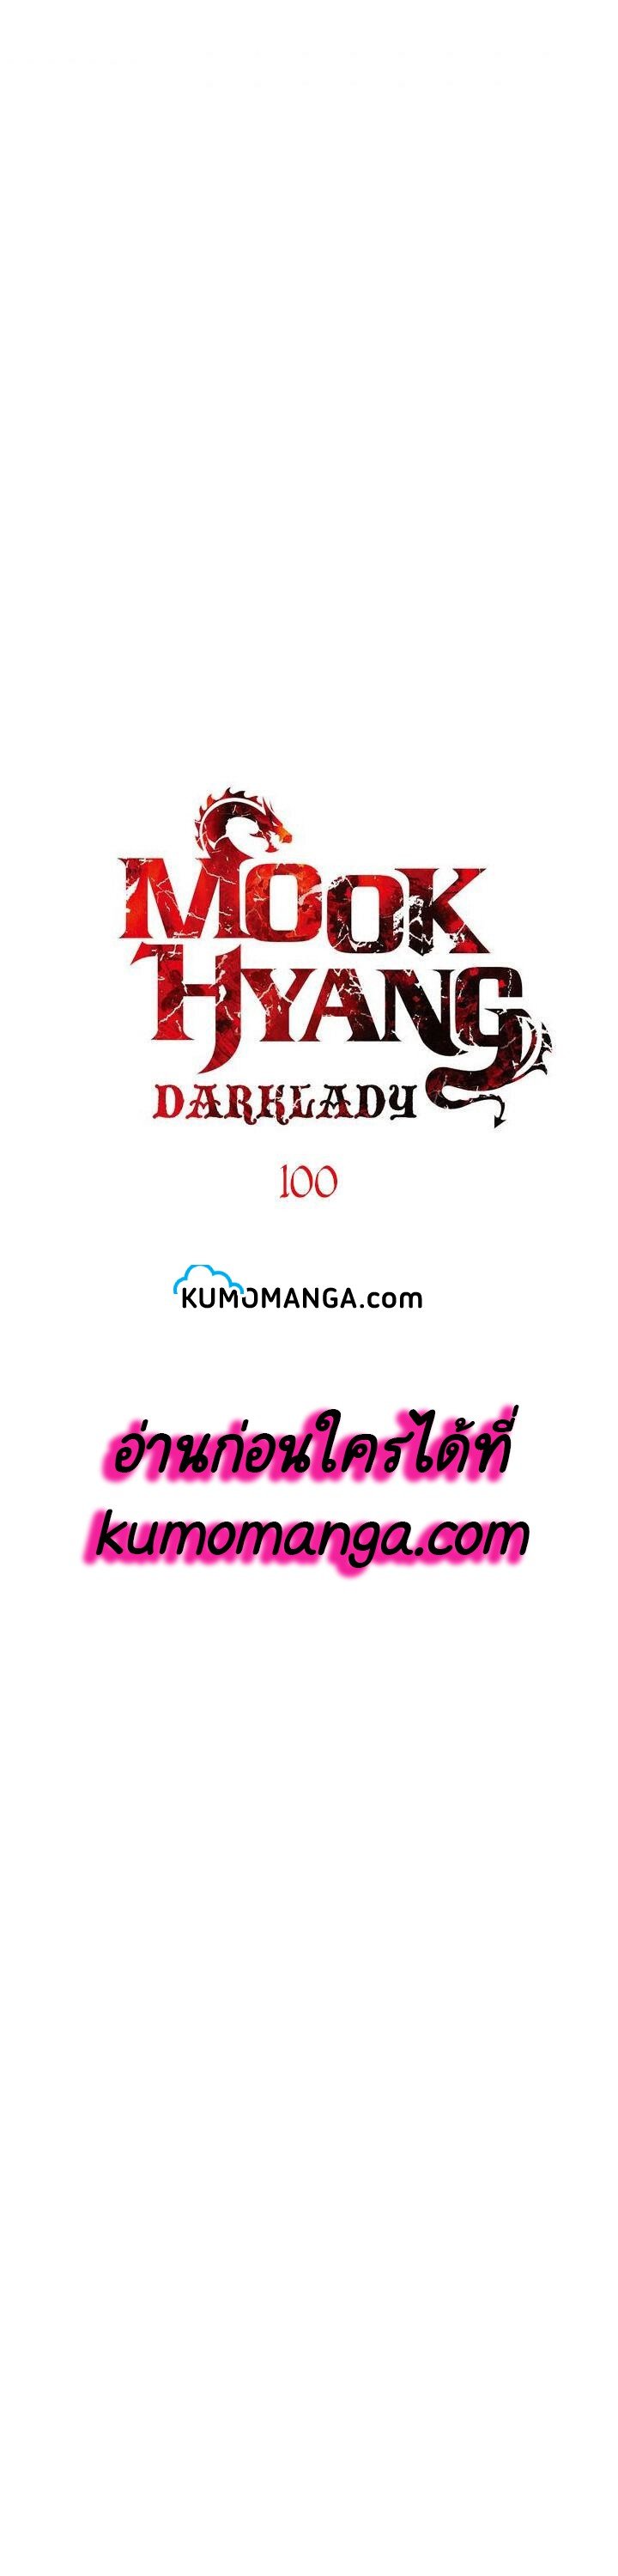 MookHyang – Dark Lady 100 (11)